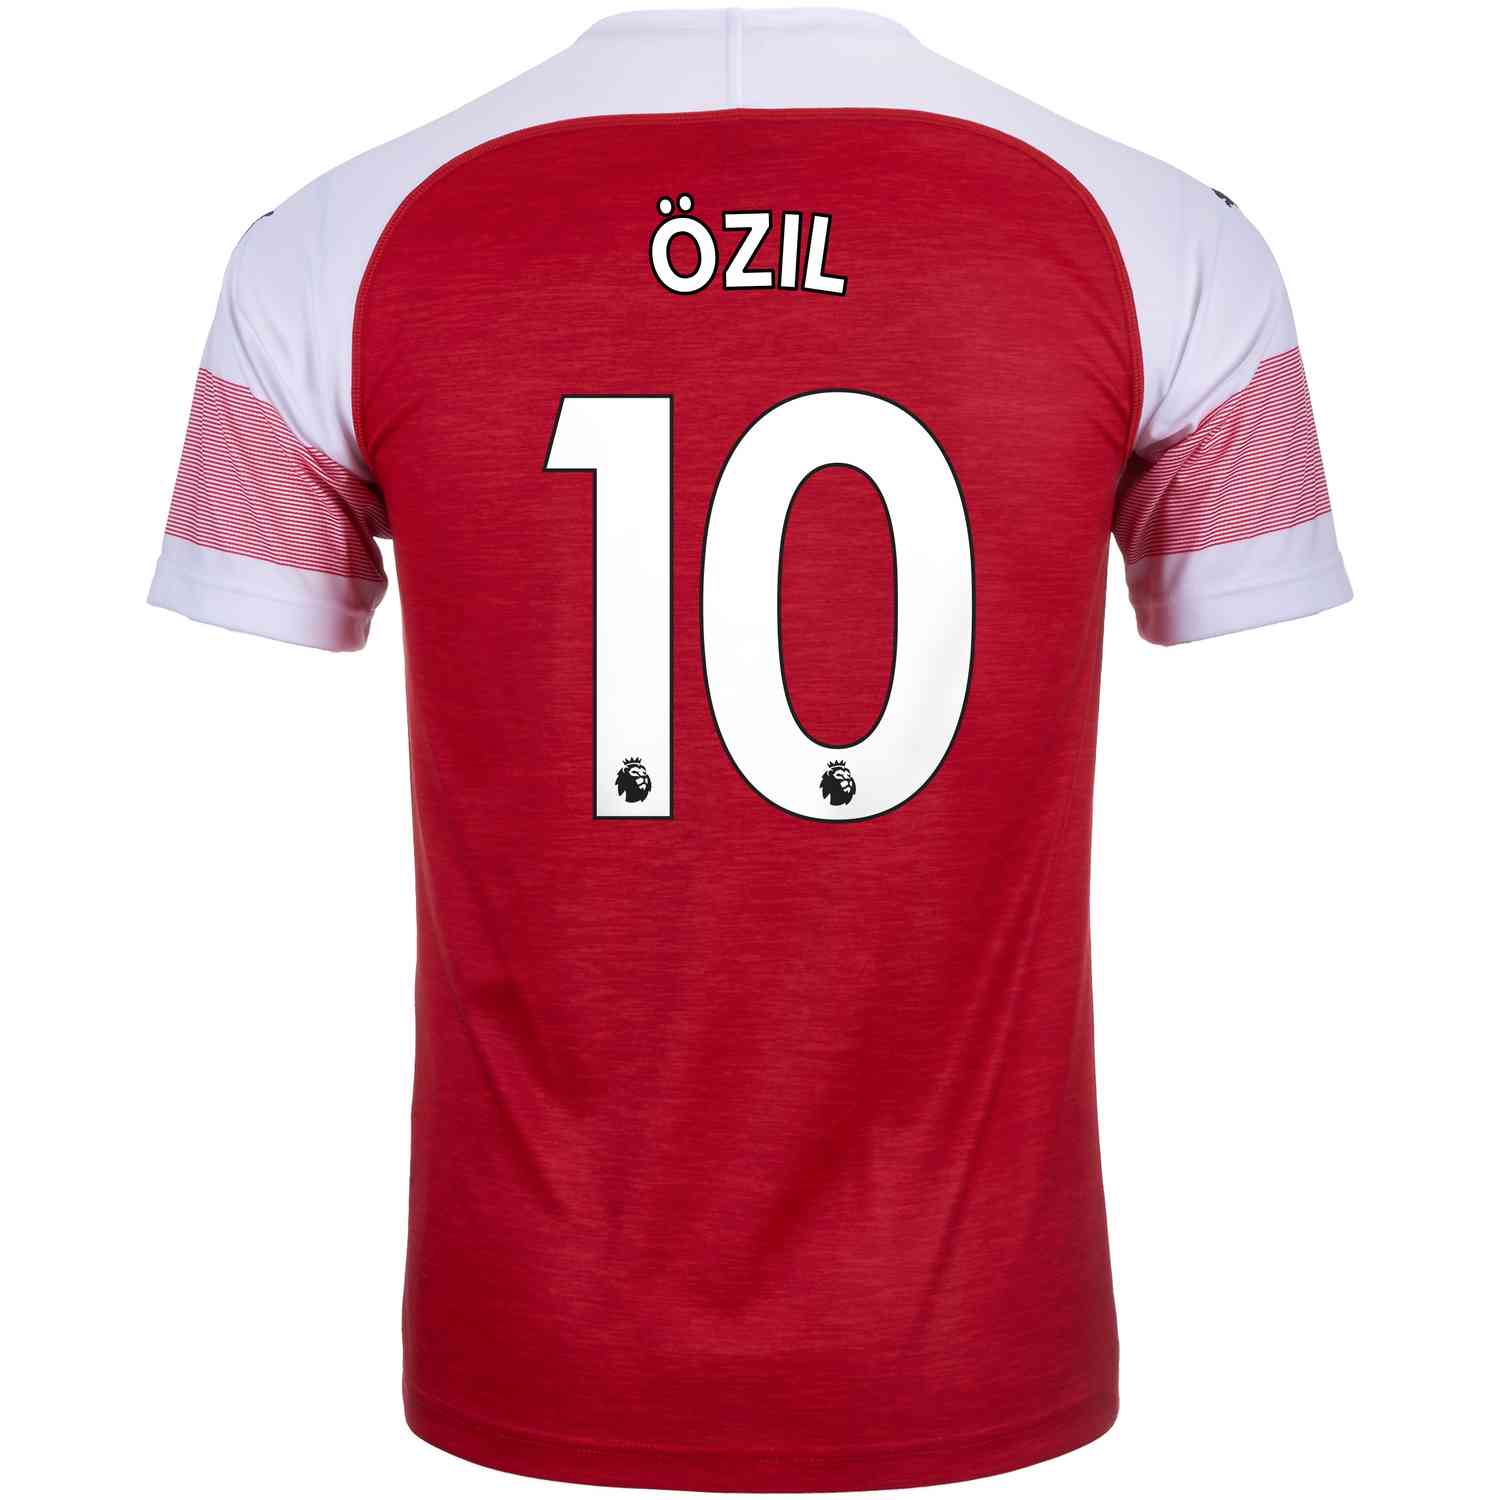 2018/19 PUMA Mesut Ozil Arsenal Home Jersey - SoccerPro